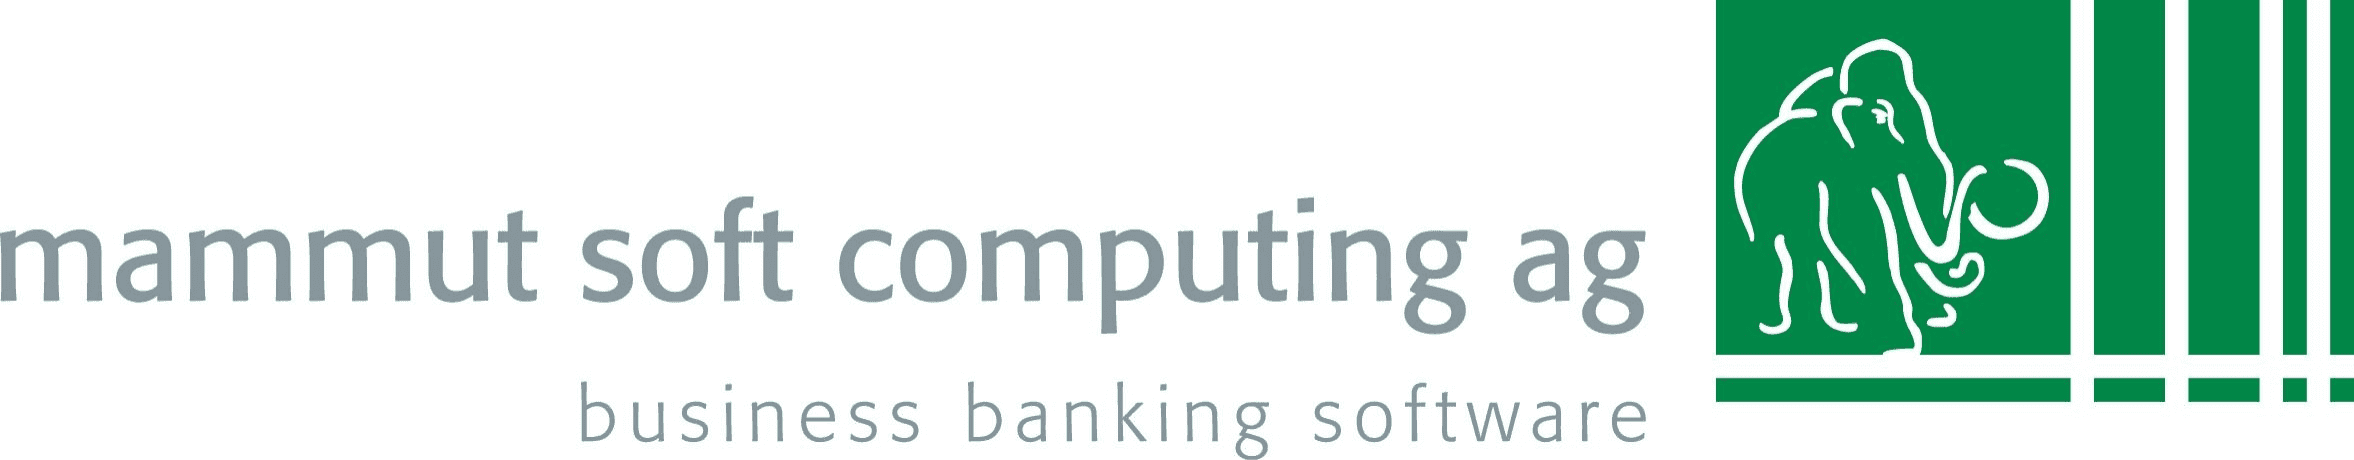 mammut soft computing ag